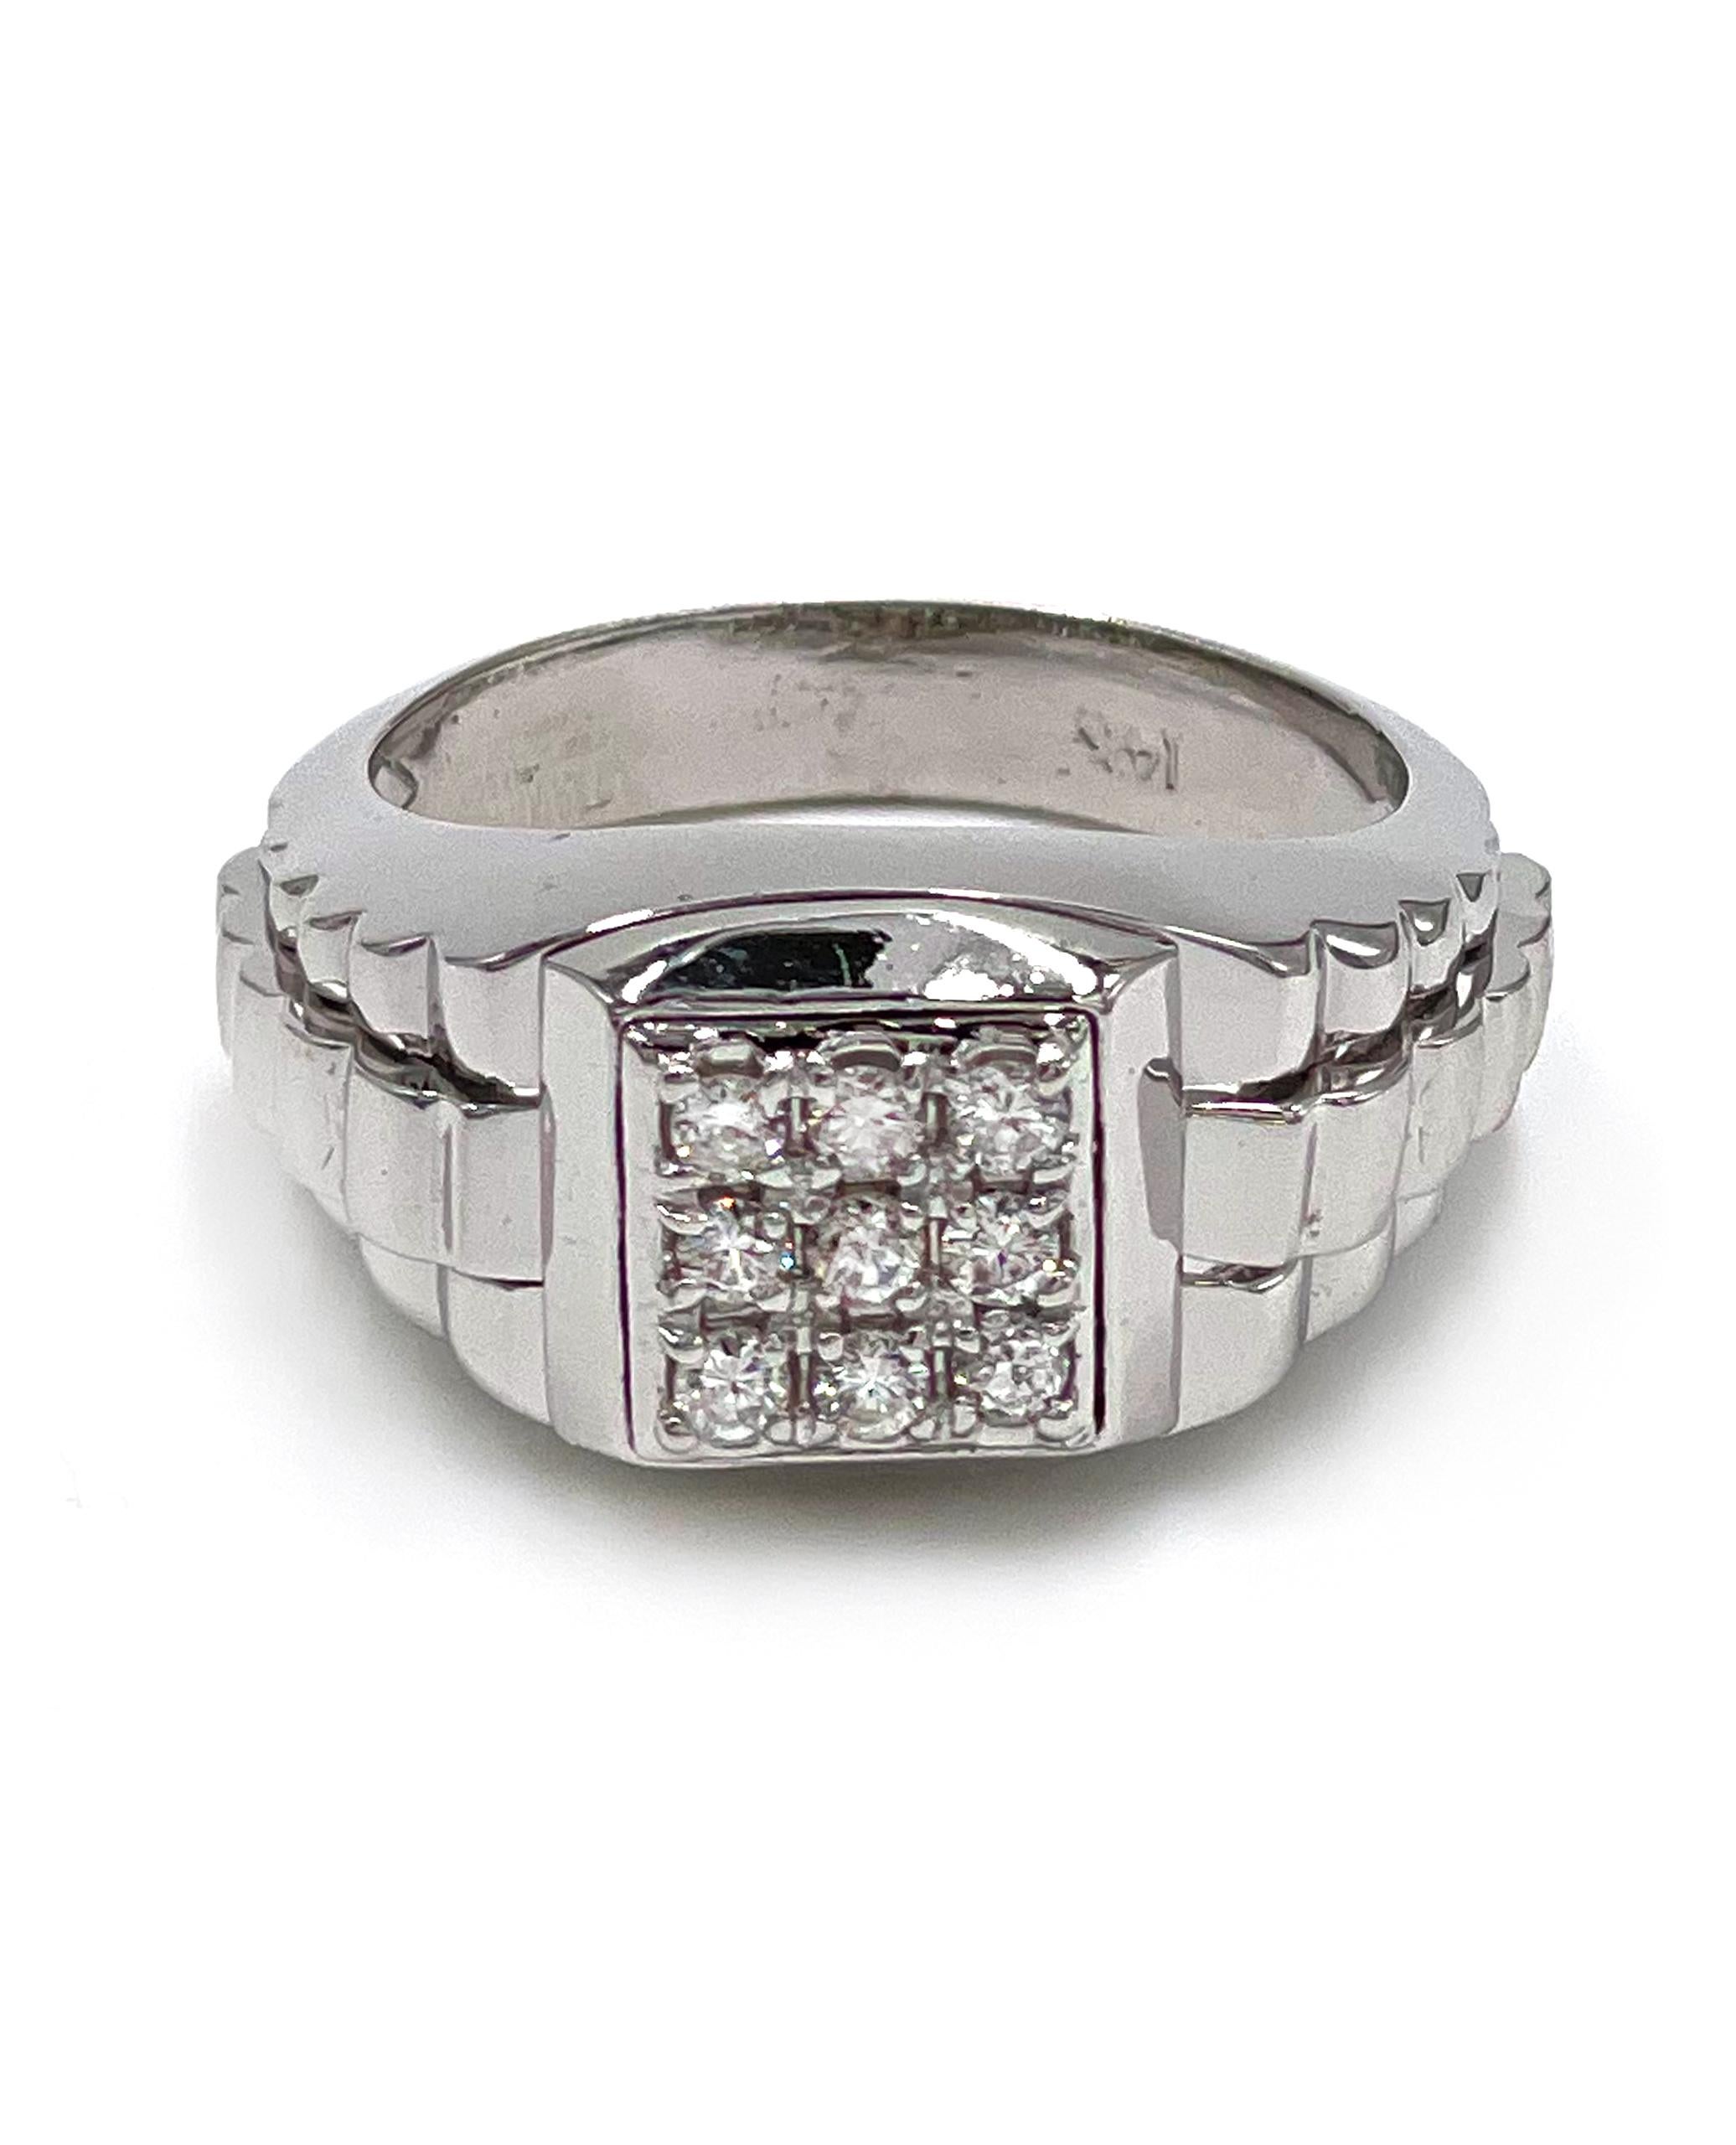 GG Certified 14K Gold Florentine Accent .54ctw Diamond Size 9.25 Men's Ring  8.3g | eBay